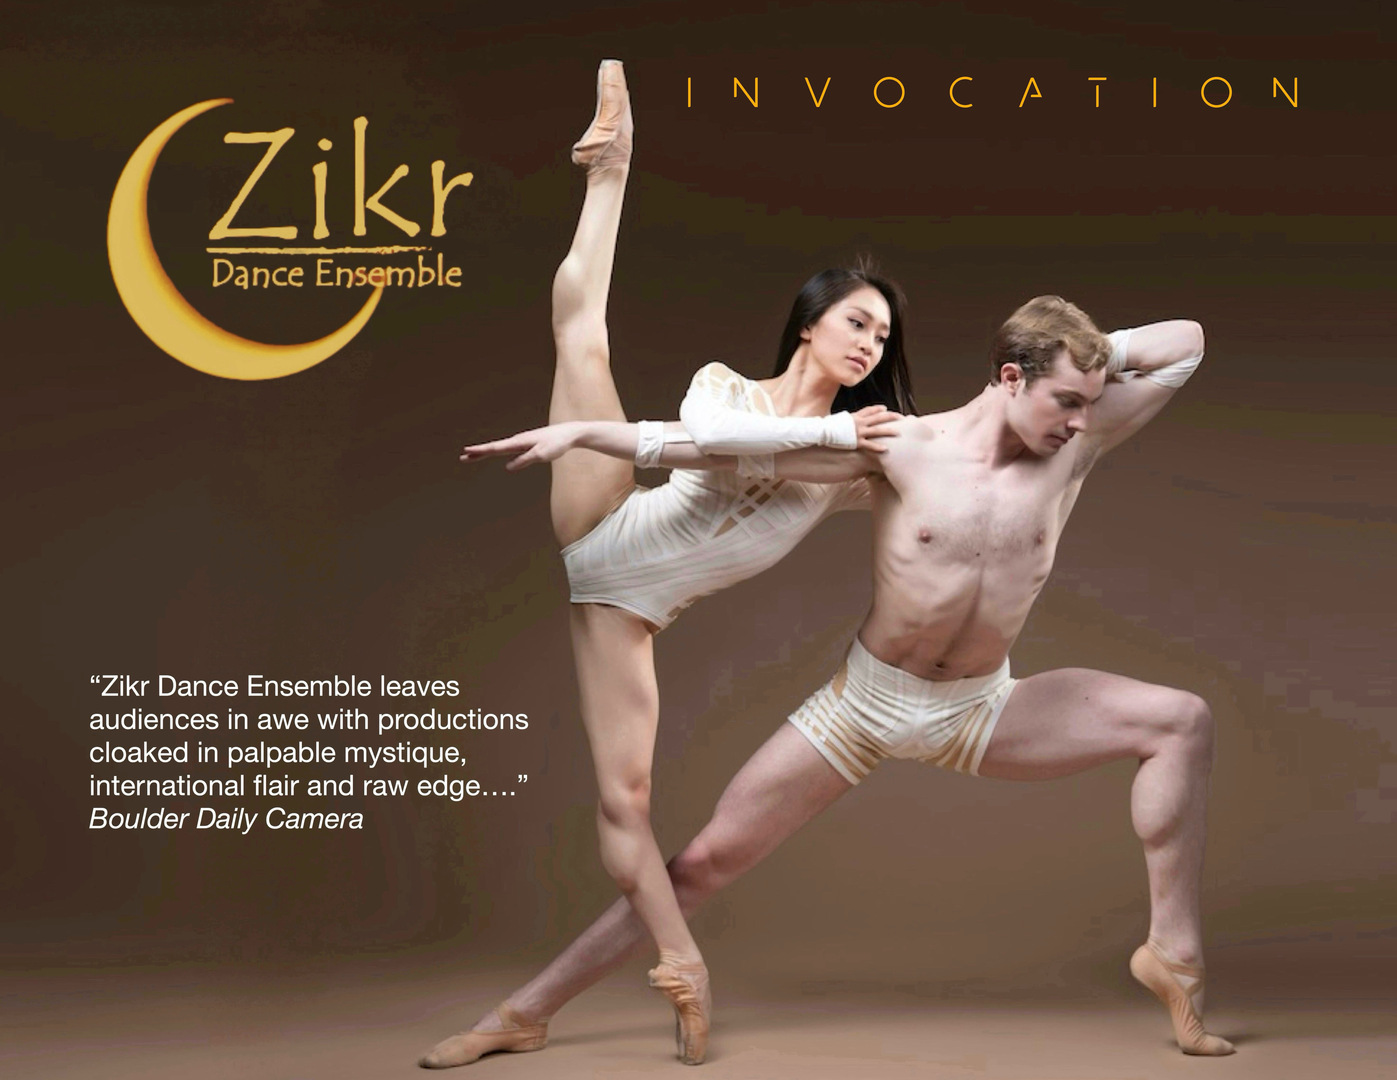 Zikr Dance Ensemble presents "Invocation", Grand Junction, Colorado, United States